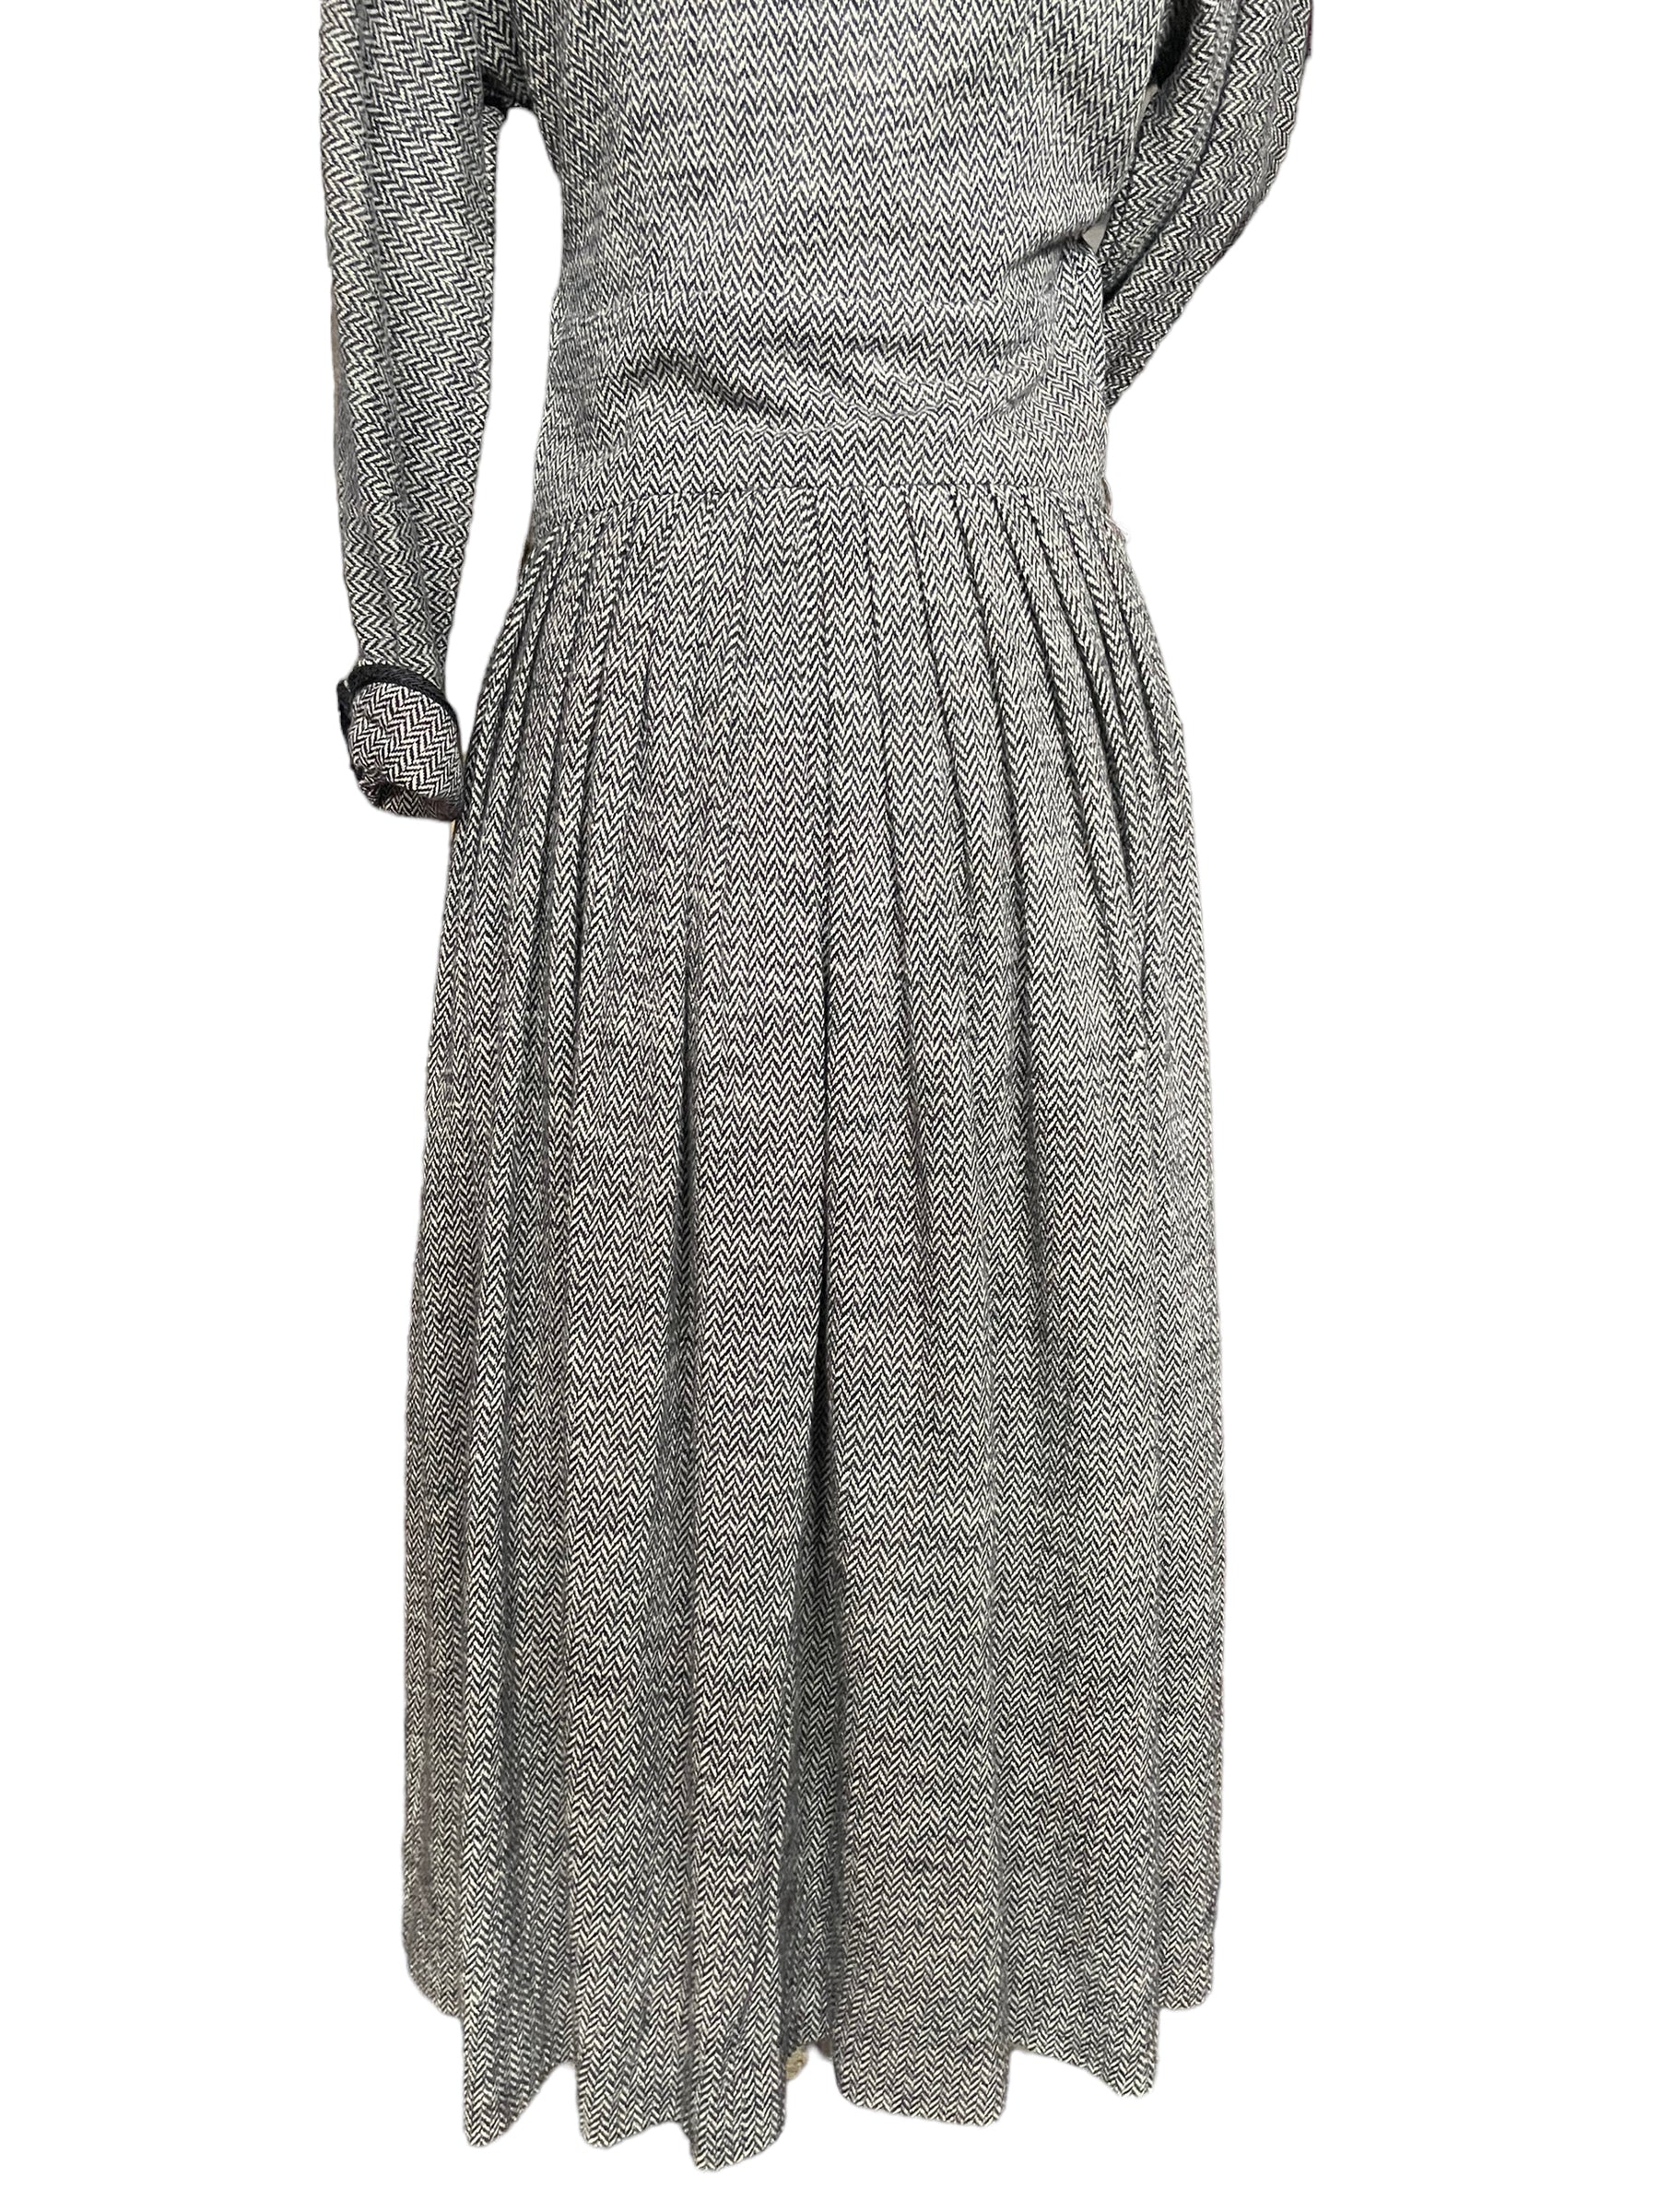 Back skirt view of Vintage 1940s Chevron Knit Dress with Beaded Collar |  Barn Owl Vintage Dresses| Seattle Vintage Dresses